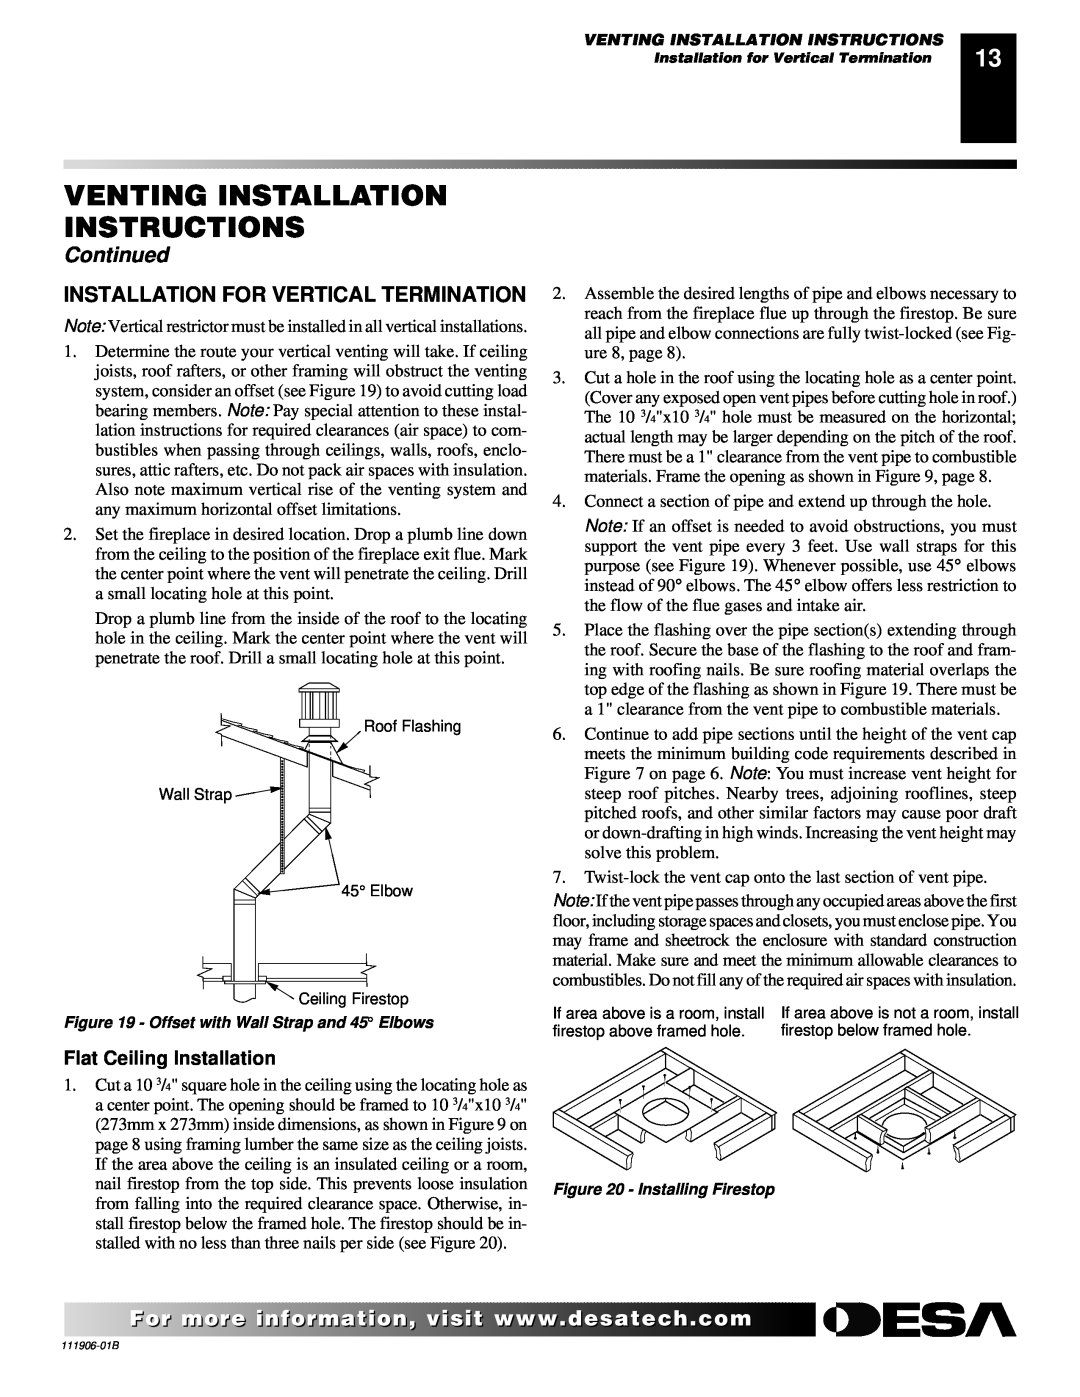 Desa CHDV42NRA, (V)V42PA(1) Venting Installation Instructions, Continued, Installation For Vertical Termination 